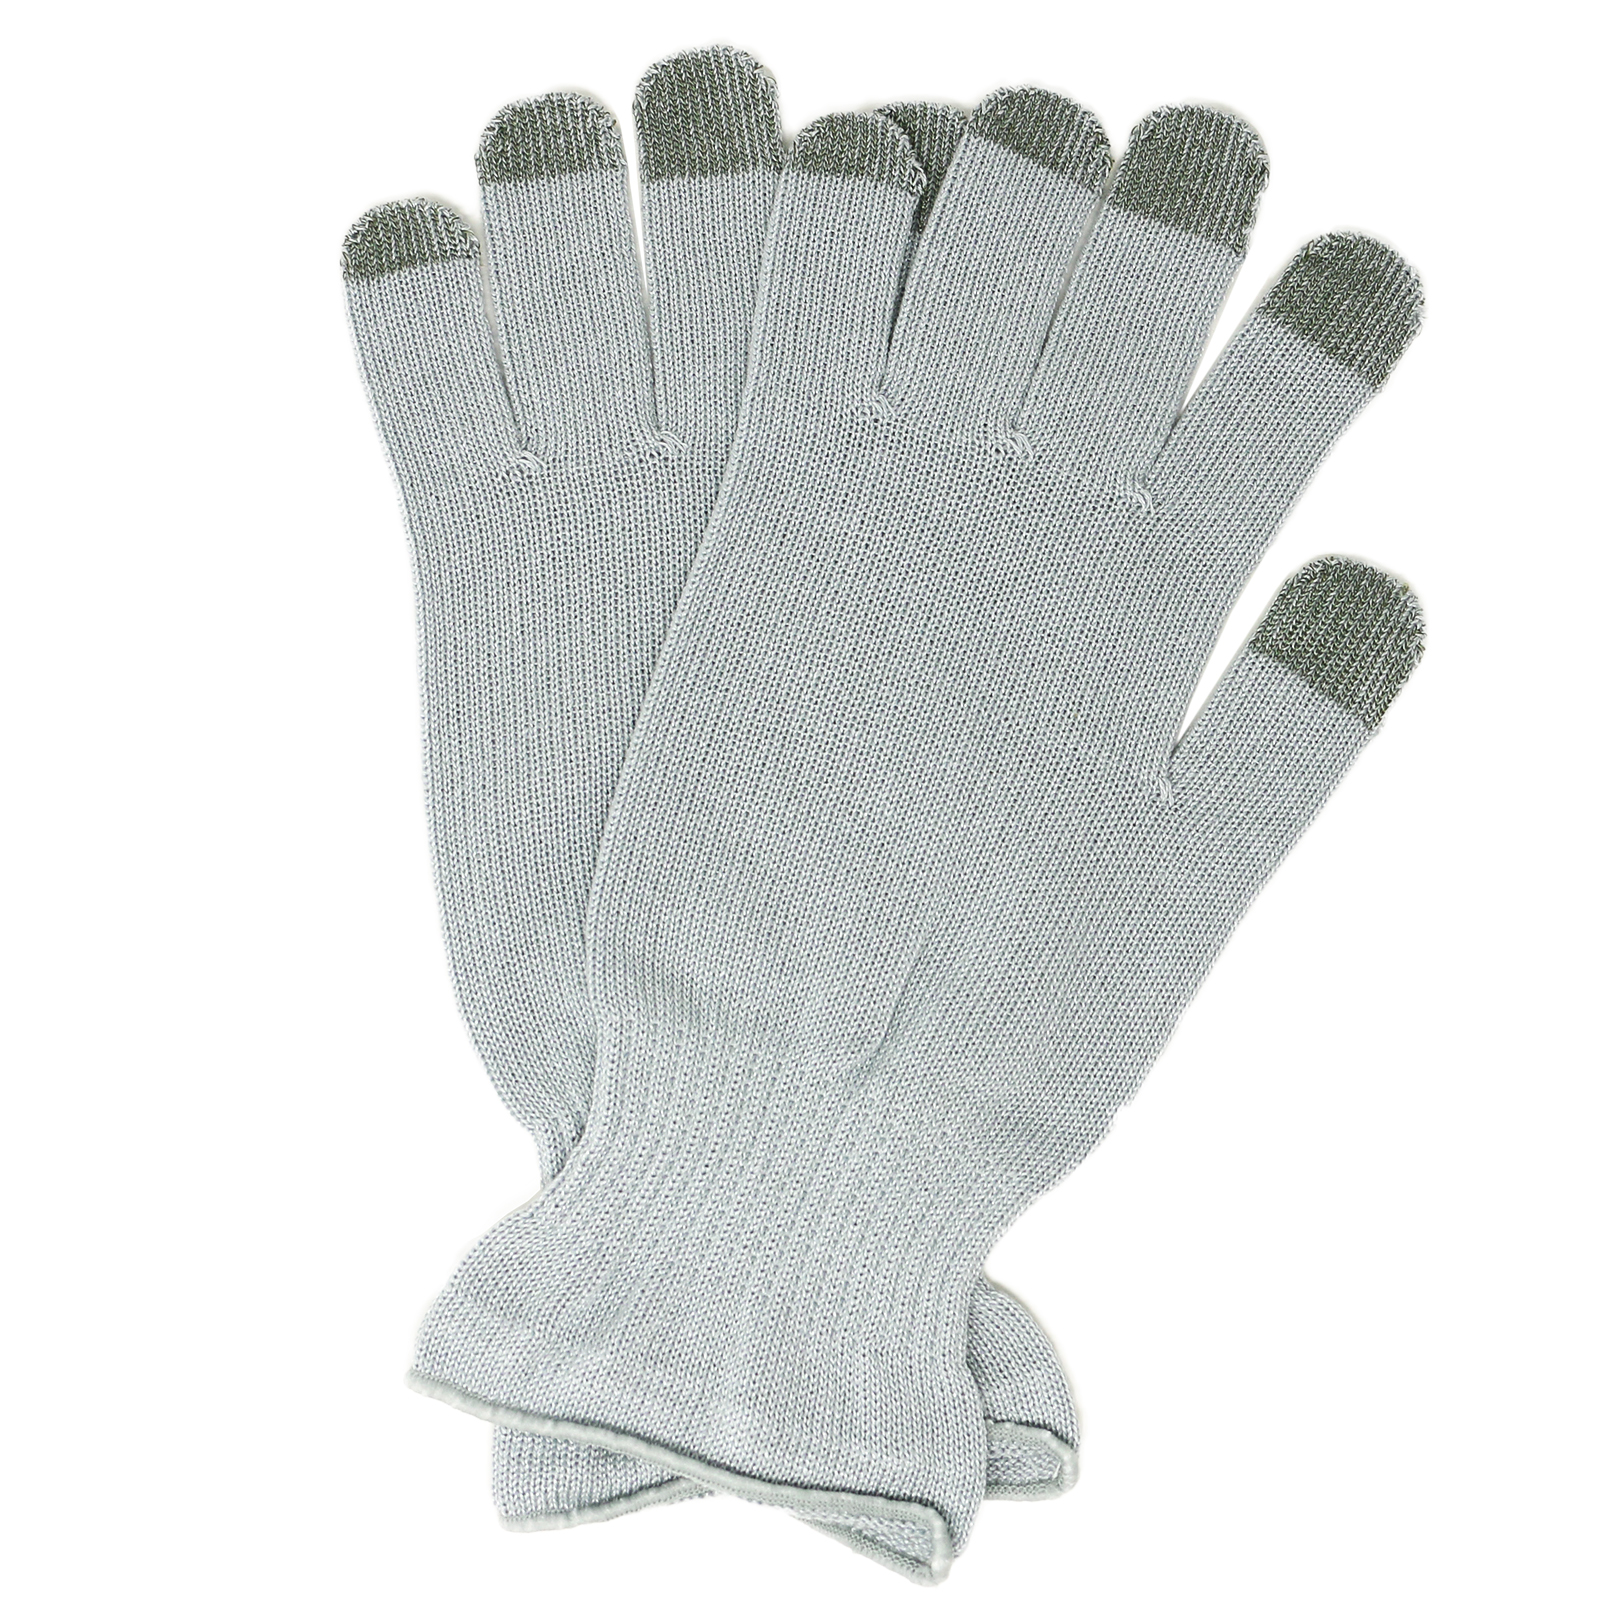 MILASIC シルク 手袋 スマホ 乾燥 保湿 日本製 潤い ナイト手袋 おやすみ手袋 スマホ対応...